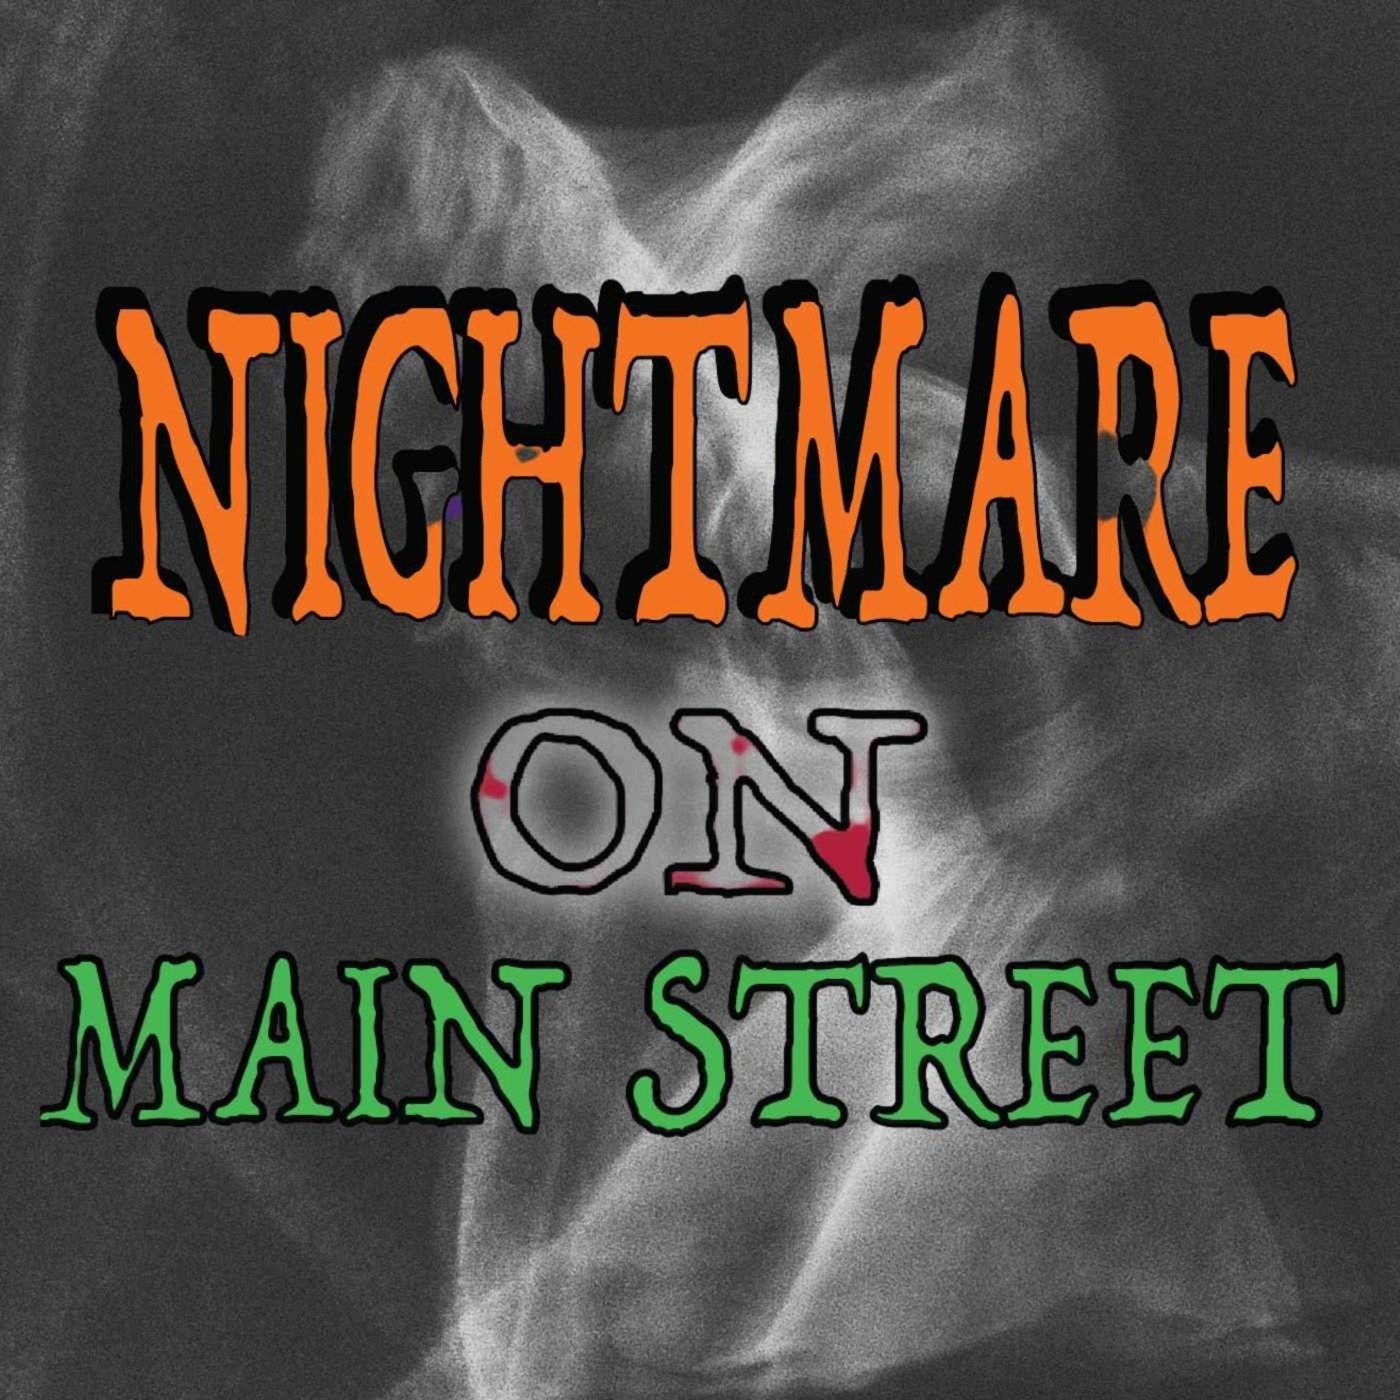 Ep. #530: NIGHTMARE ON MAIN STREET